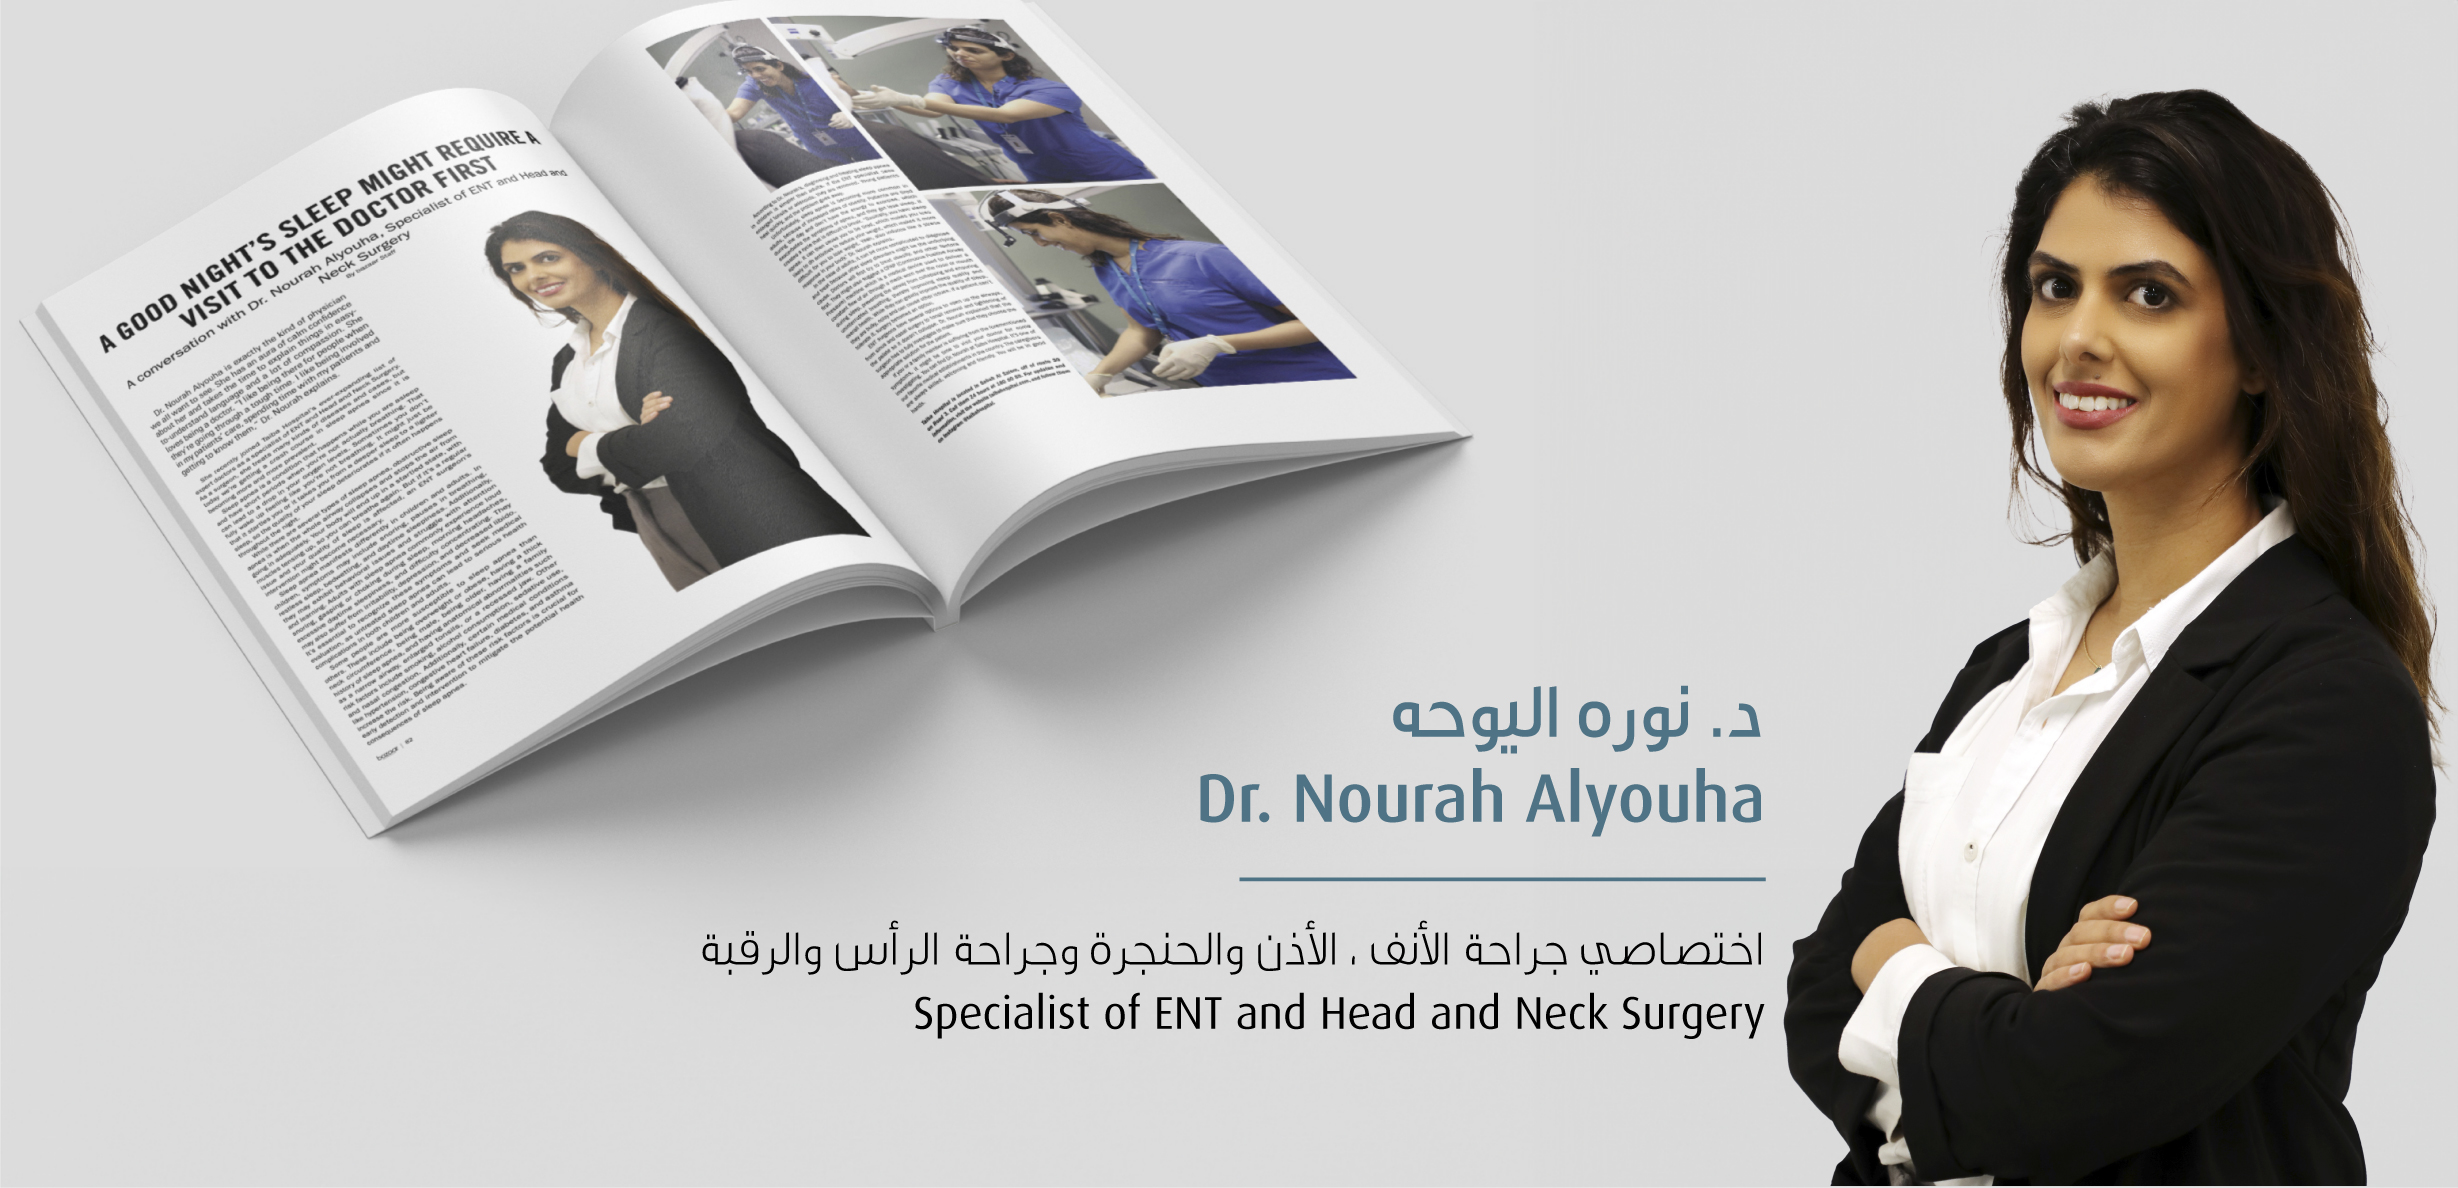 Exploring Sleep Apnea: An Interview with Dr. Nourah Alyouha by Bazaar team